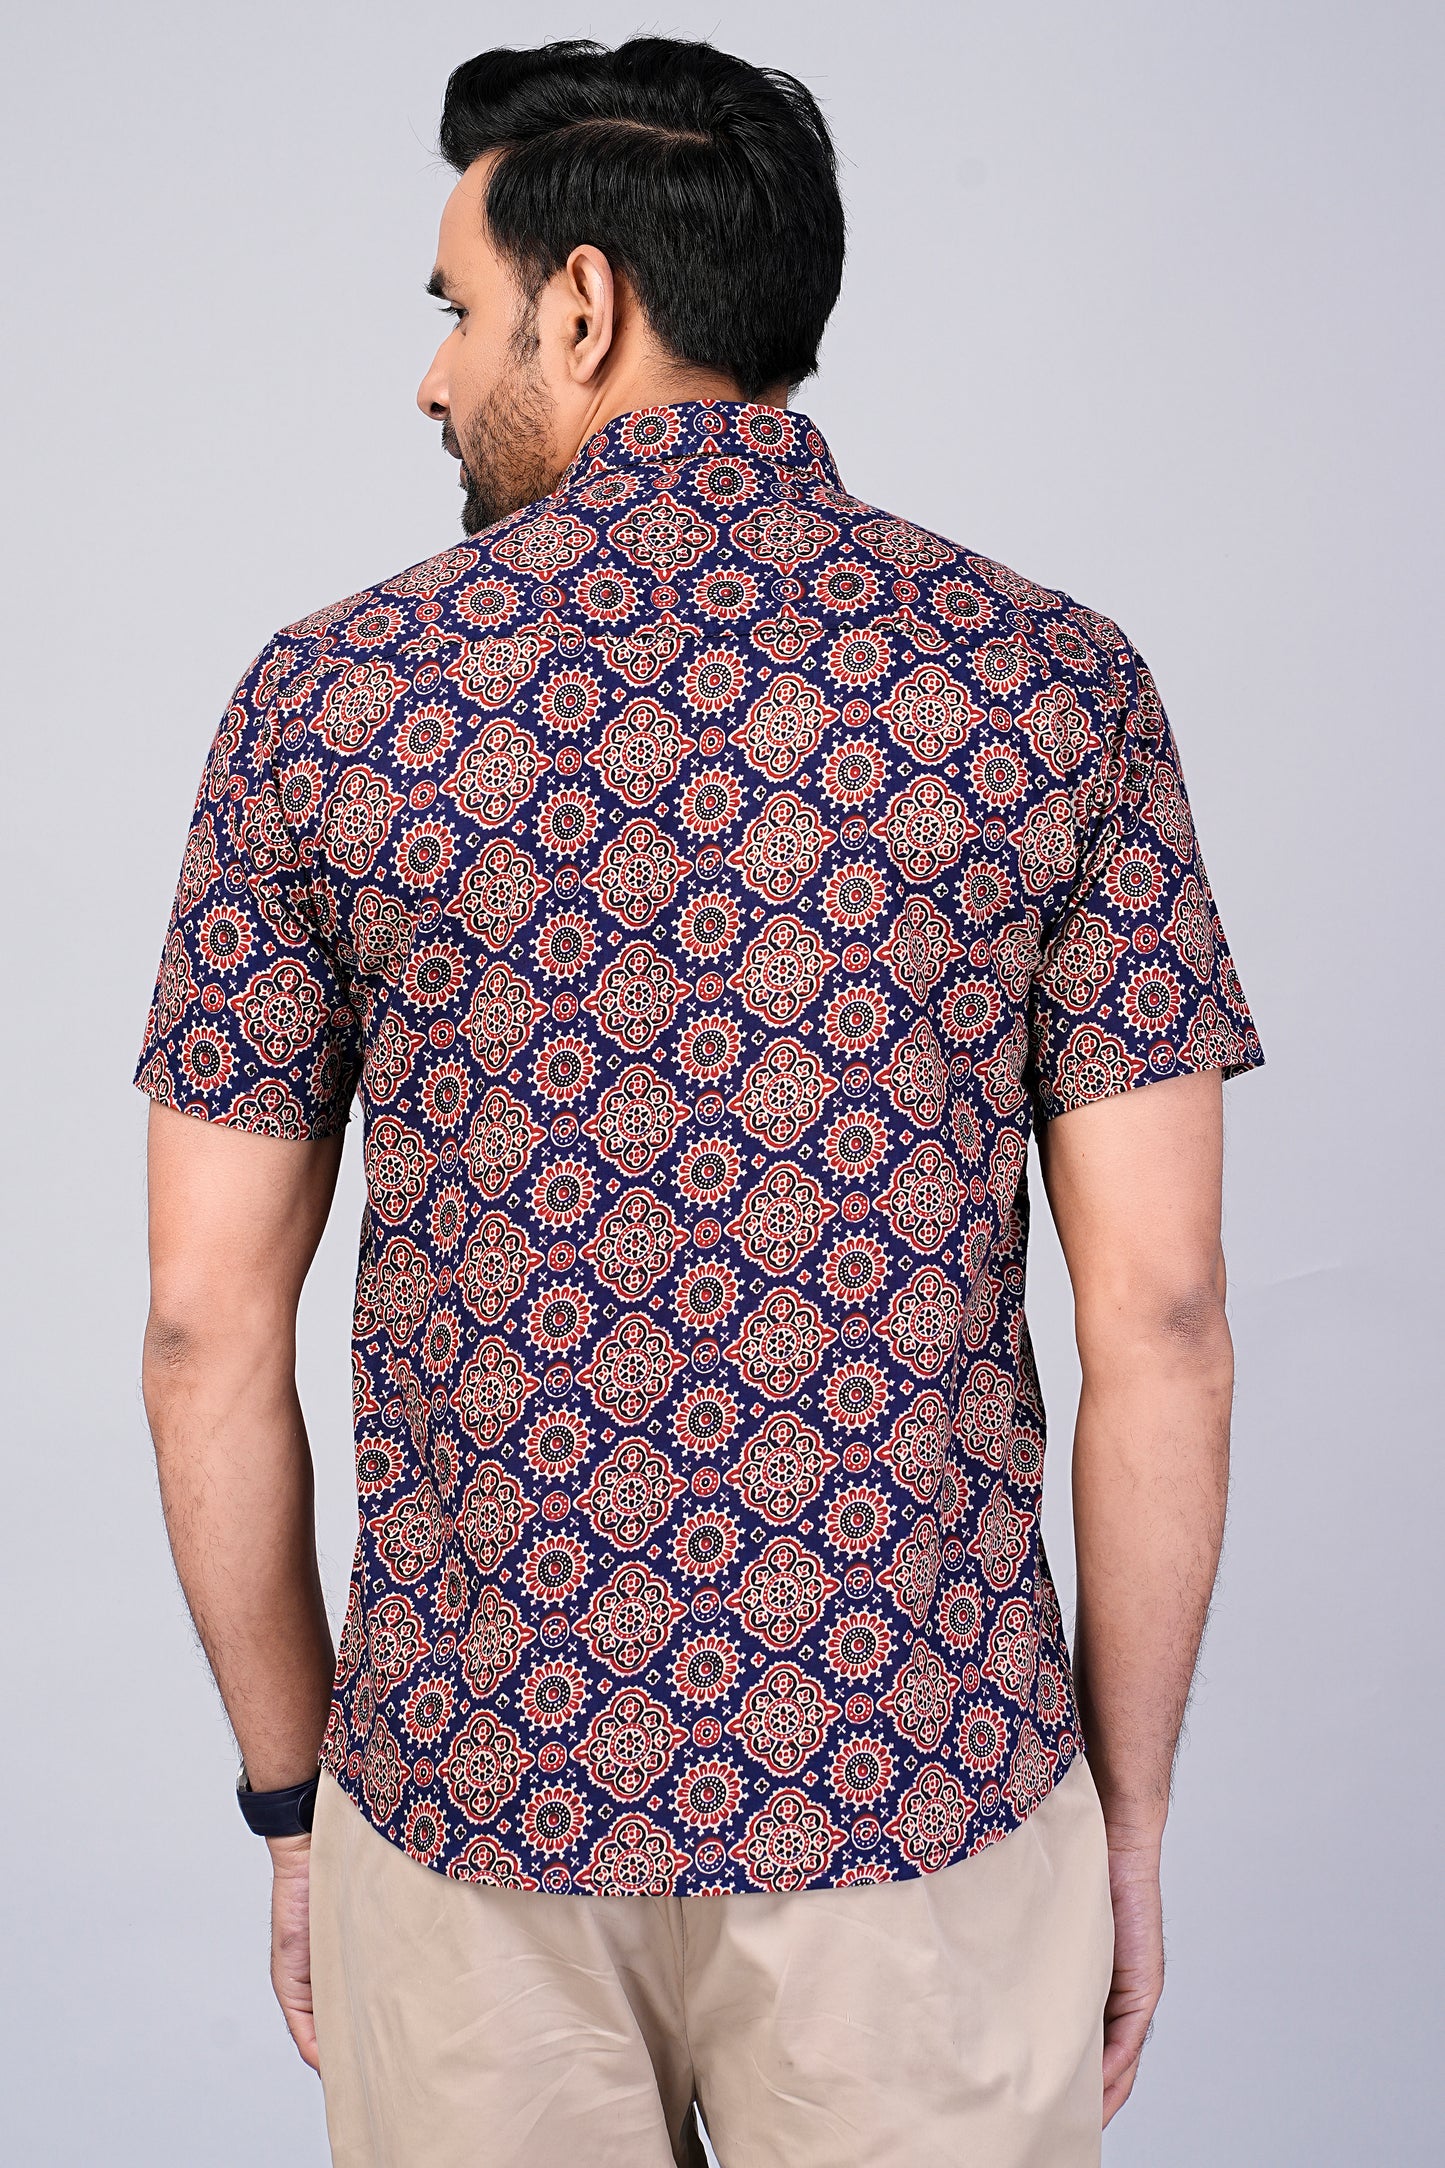 Men's Ethnic Ajrakh Printed Half-Sleeves shirts